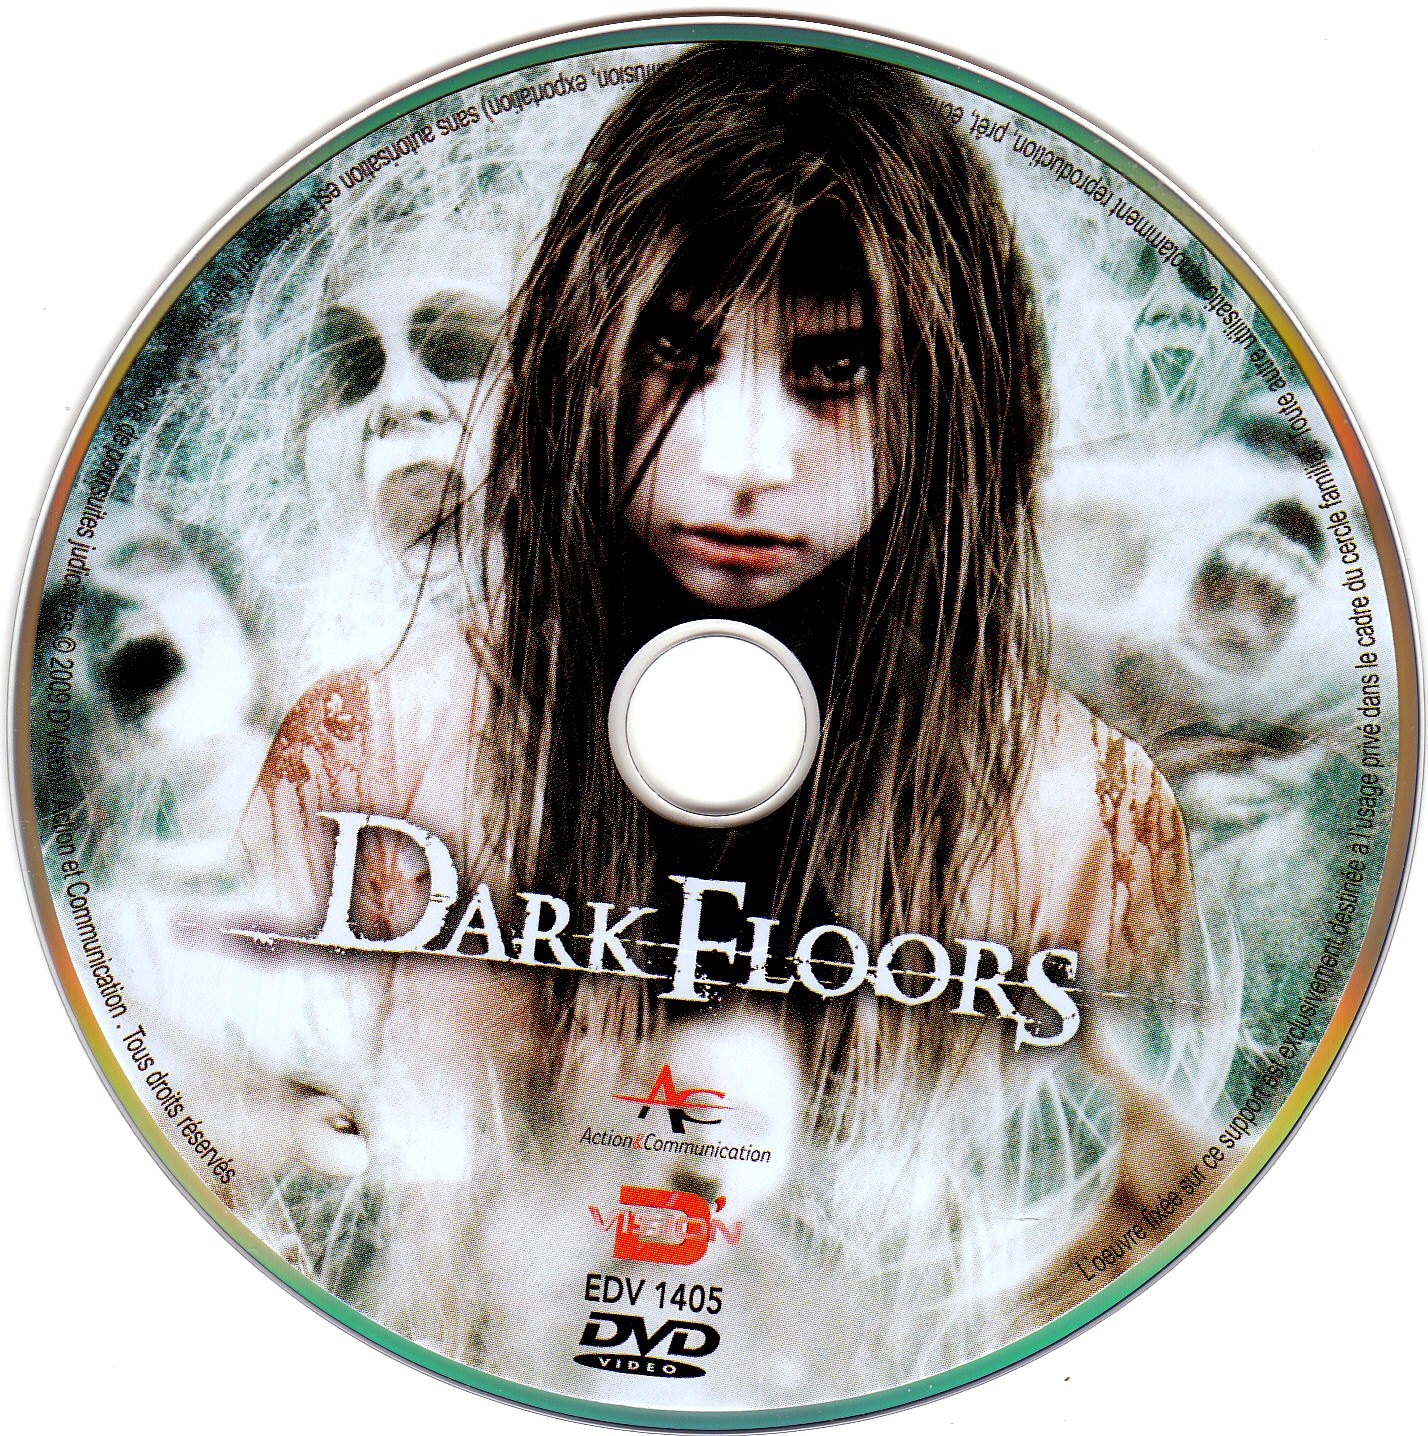 Dark floors